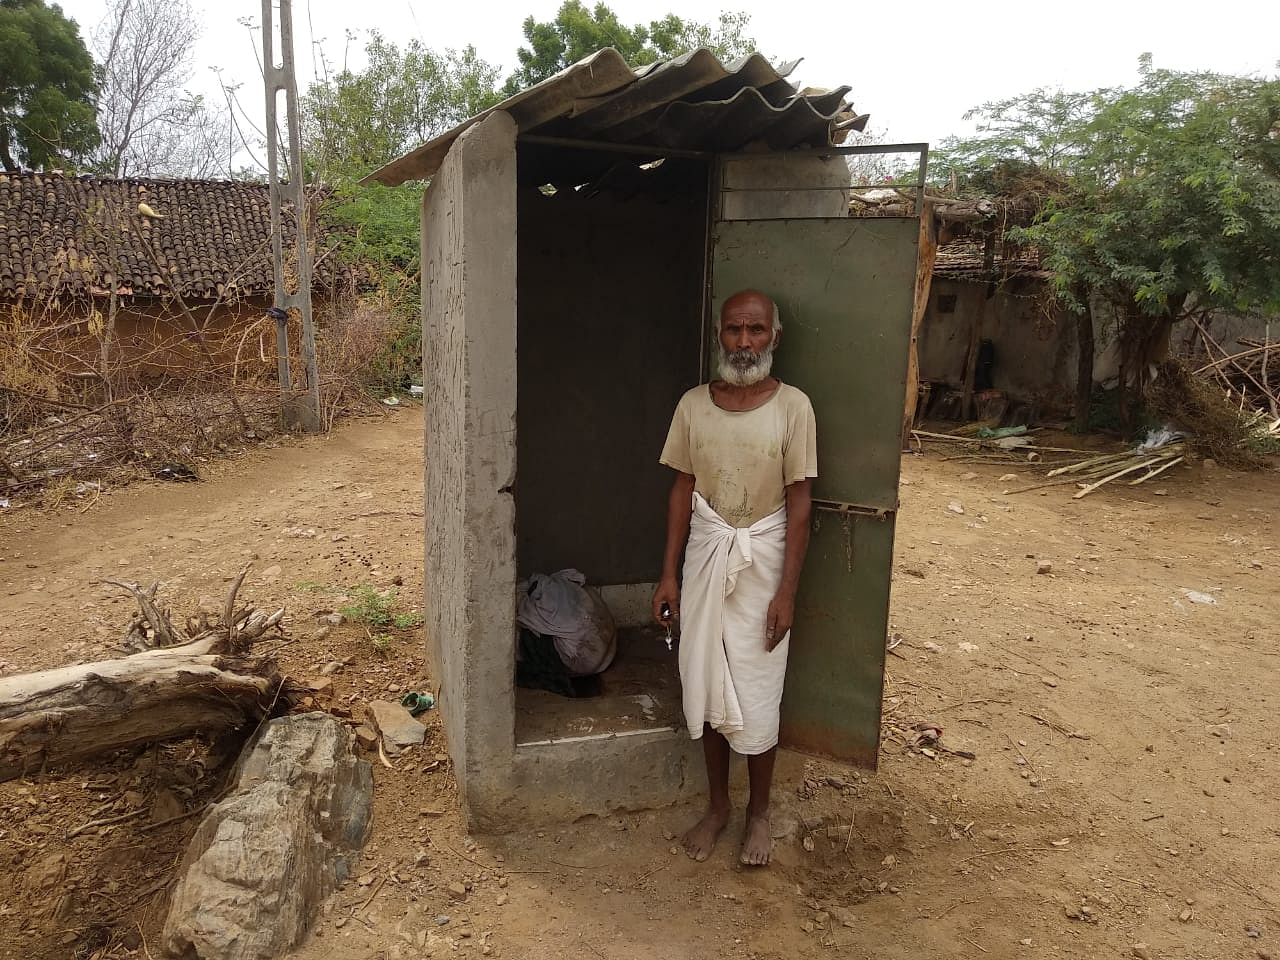 Hagrabhai Taraal has kept remains of his son in a bundle locked in the unused toilet in a village in Banaskantha in north Gujarat. Credit: DH Photo